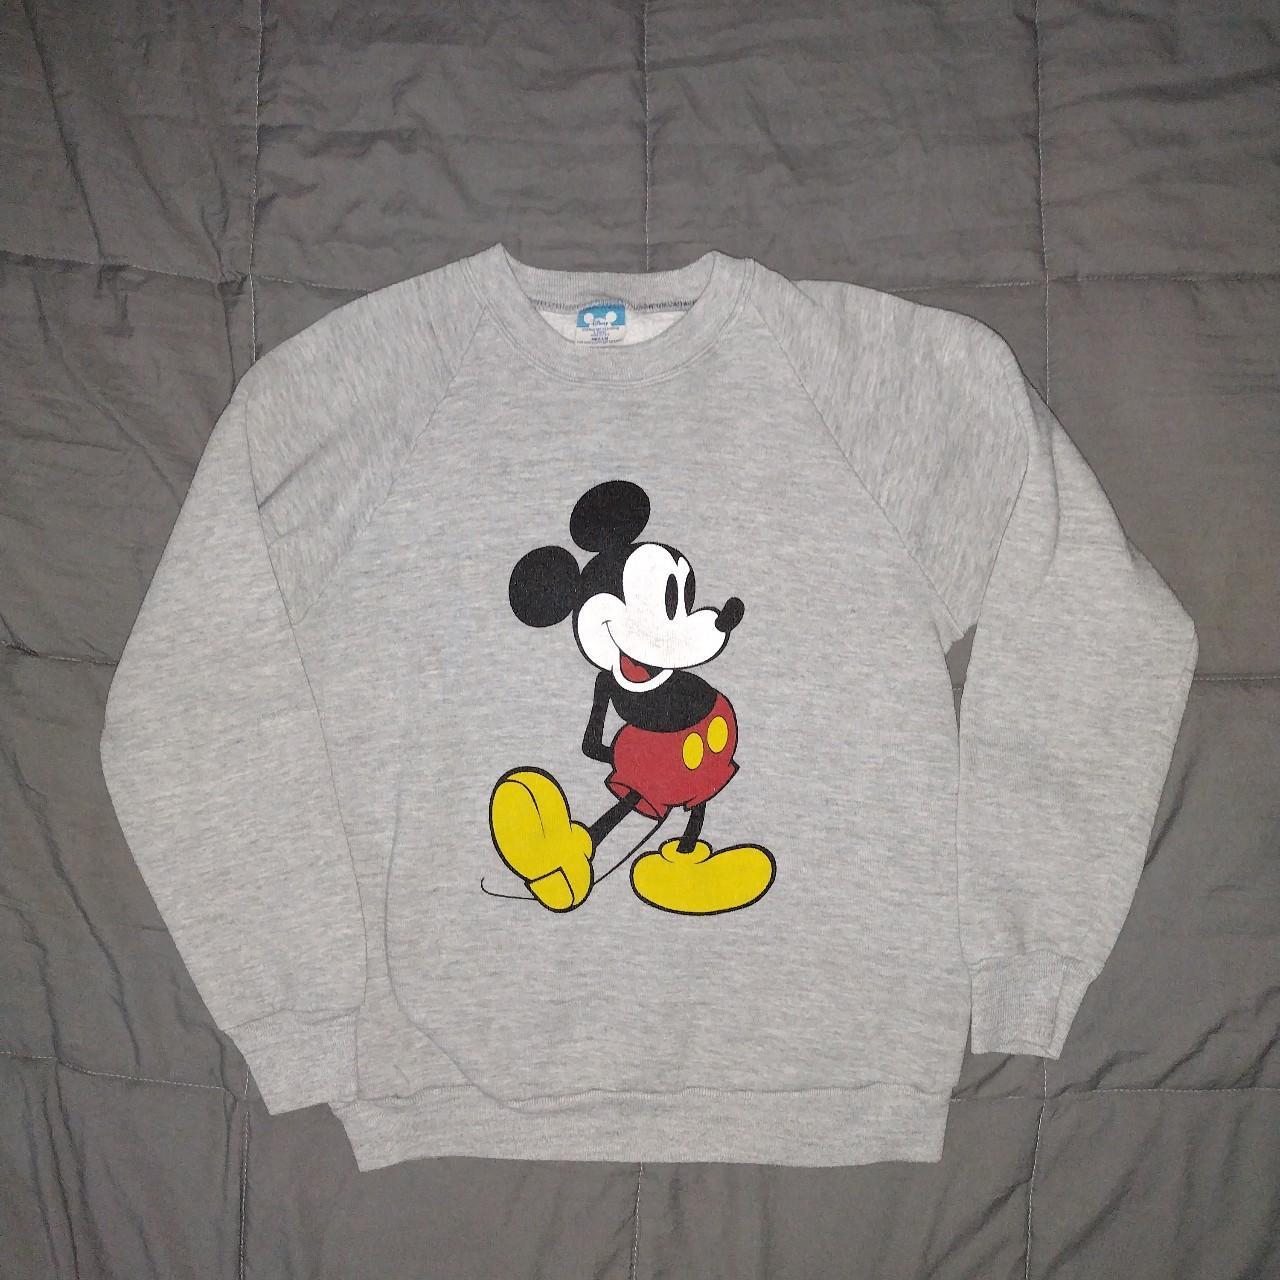 Vintage 80s 90s Disney Mickey mouse grey crewneck